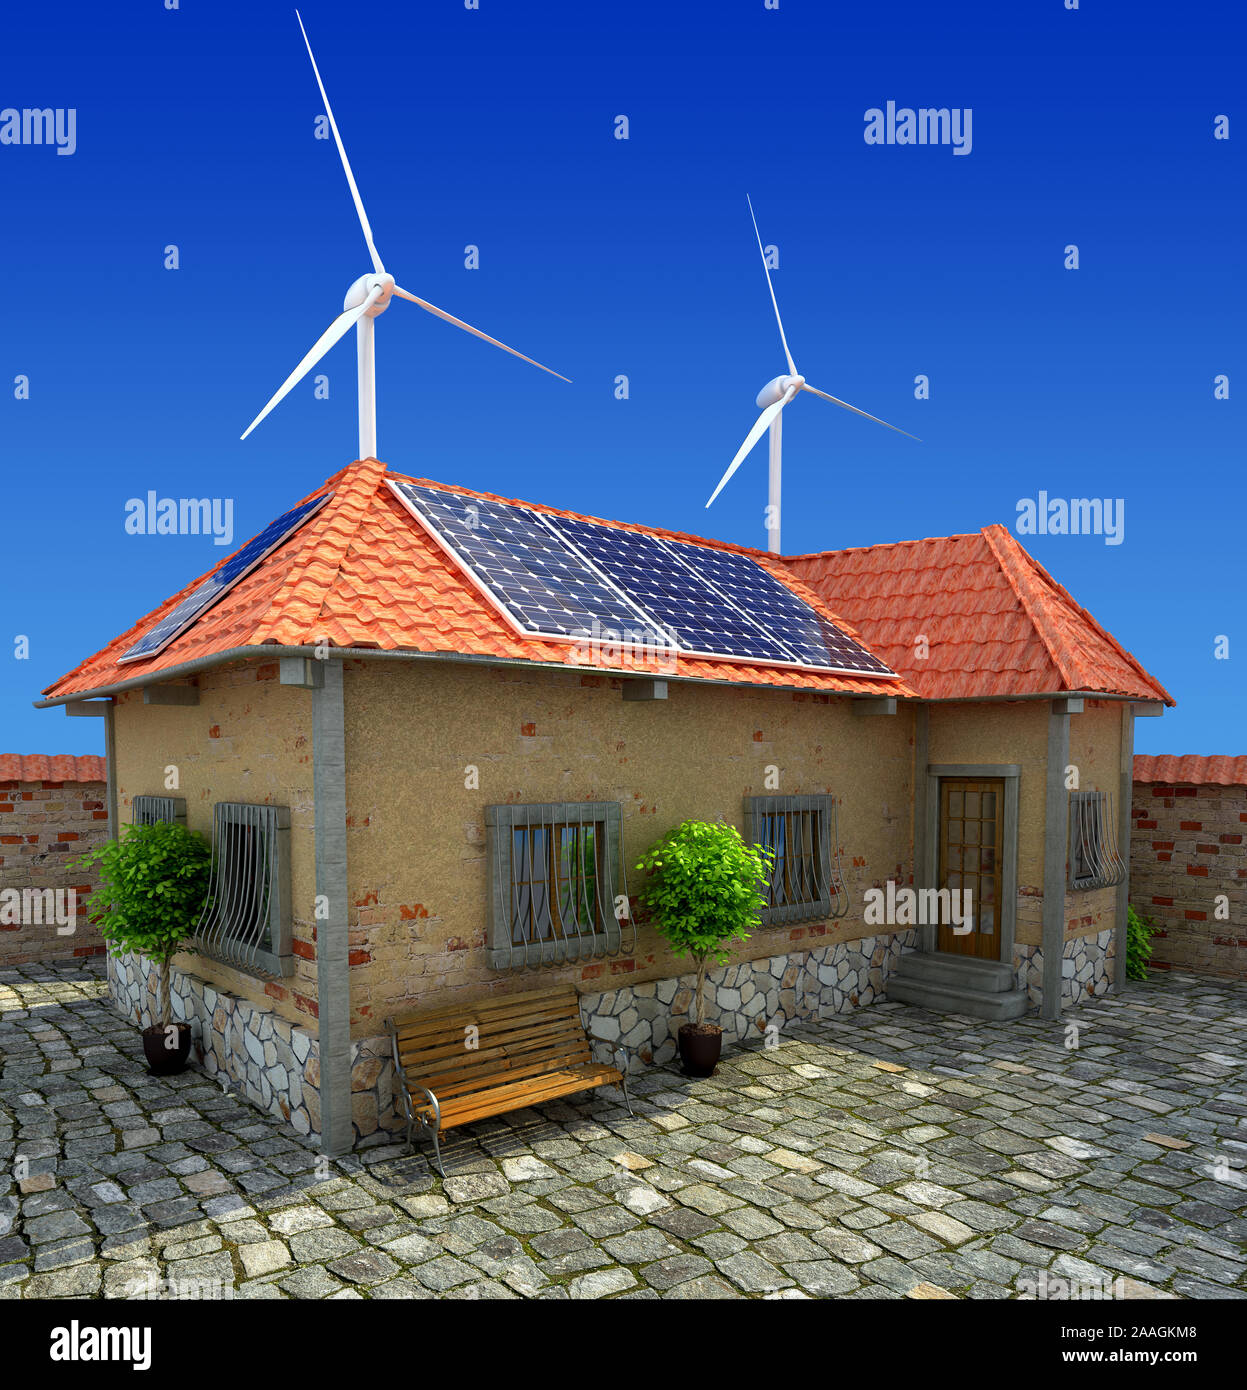 Home Solar energy - renewable energy concept	- solar energy system for house - 3d render Stock Photo